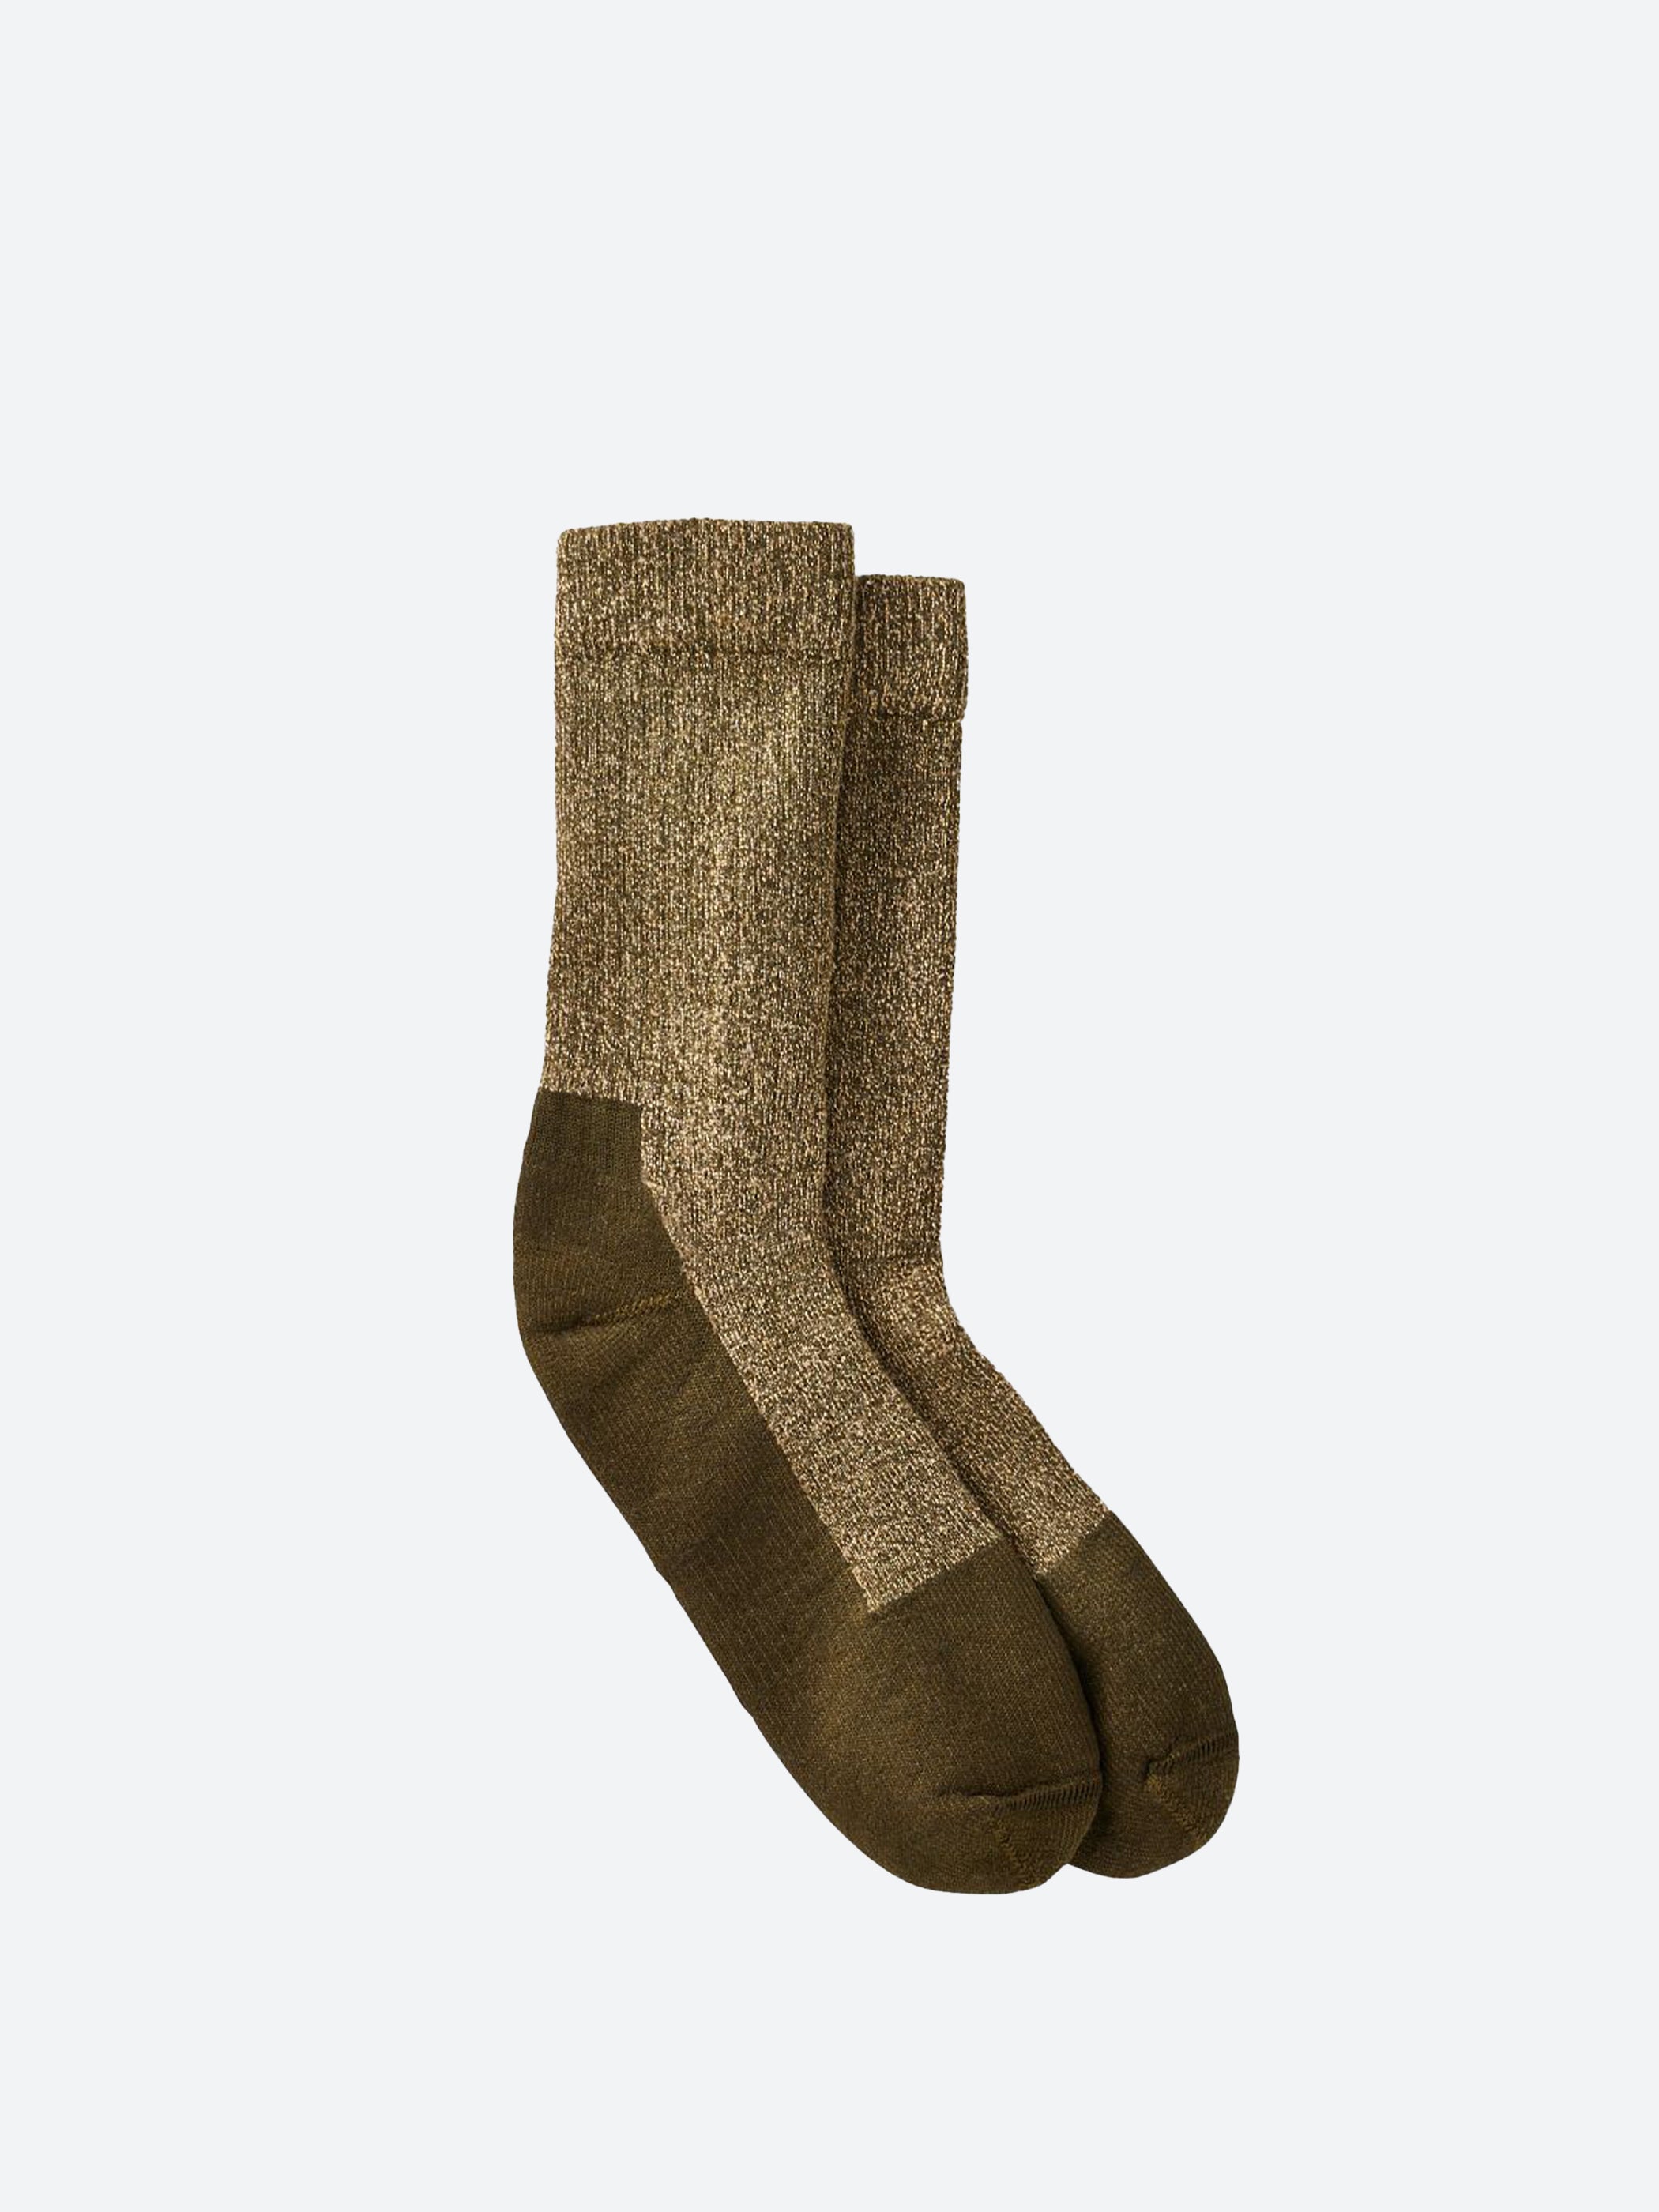 Deep Toe-Capped Socks